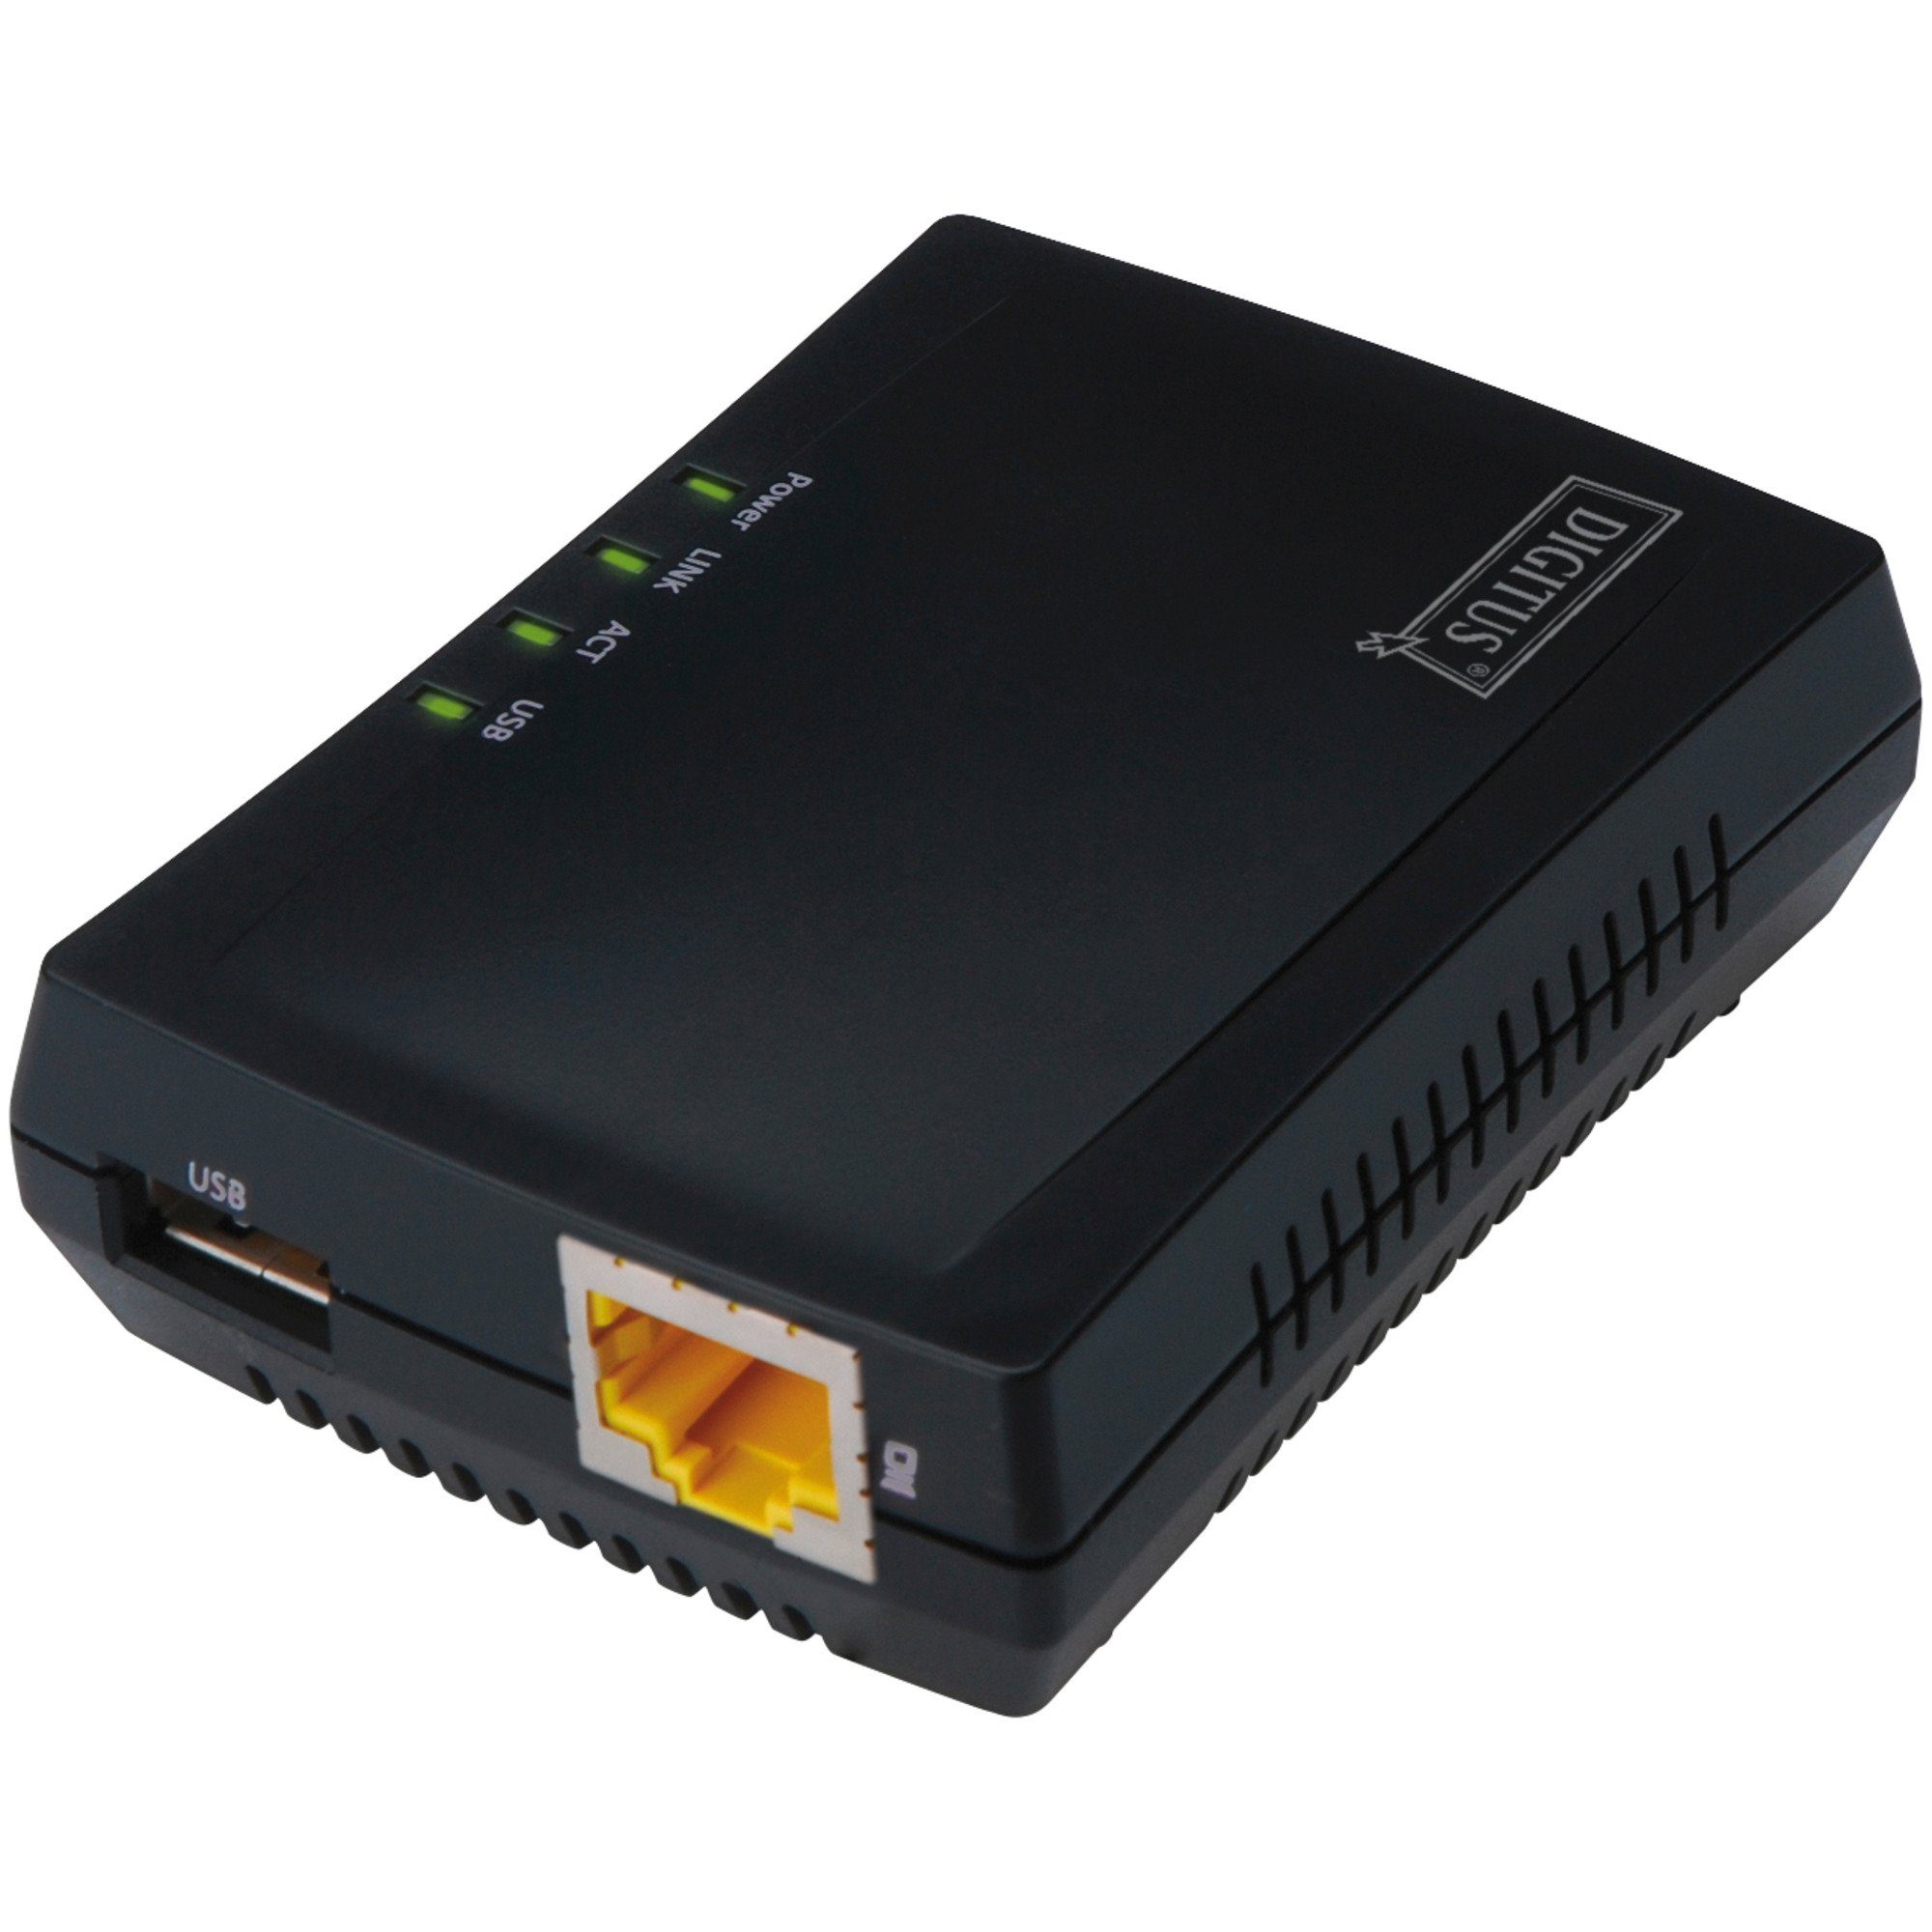 Digitus Digitus Multifunktions-Netzwerkserver, (USB Netzwerk-Adapter